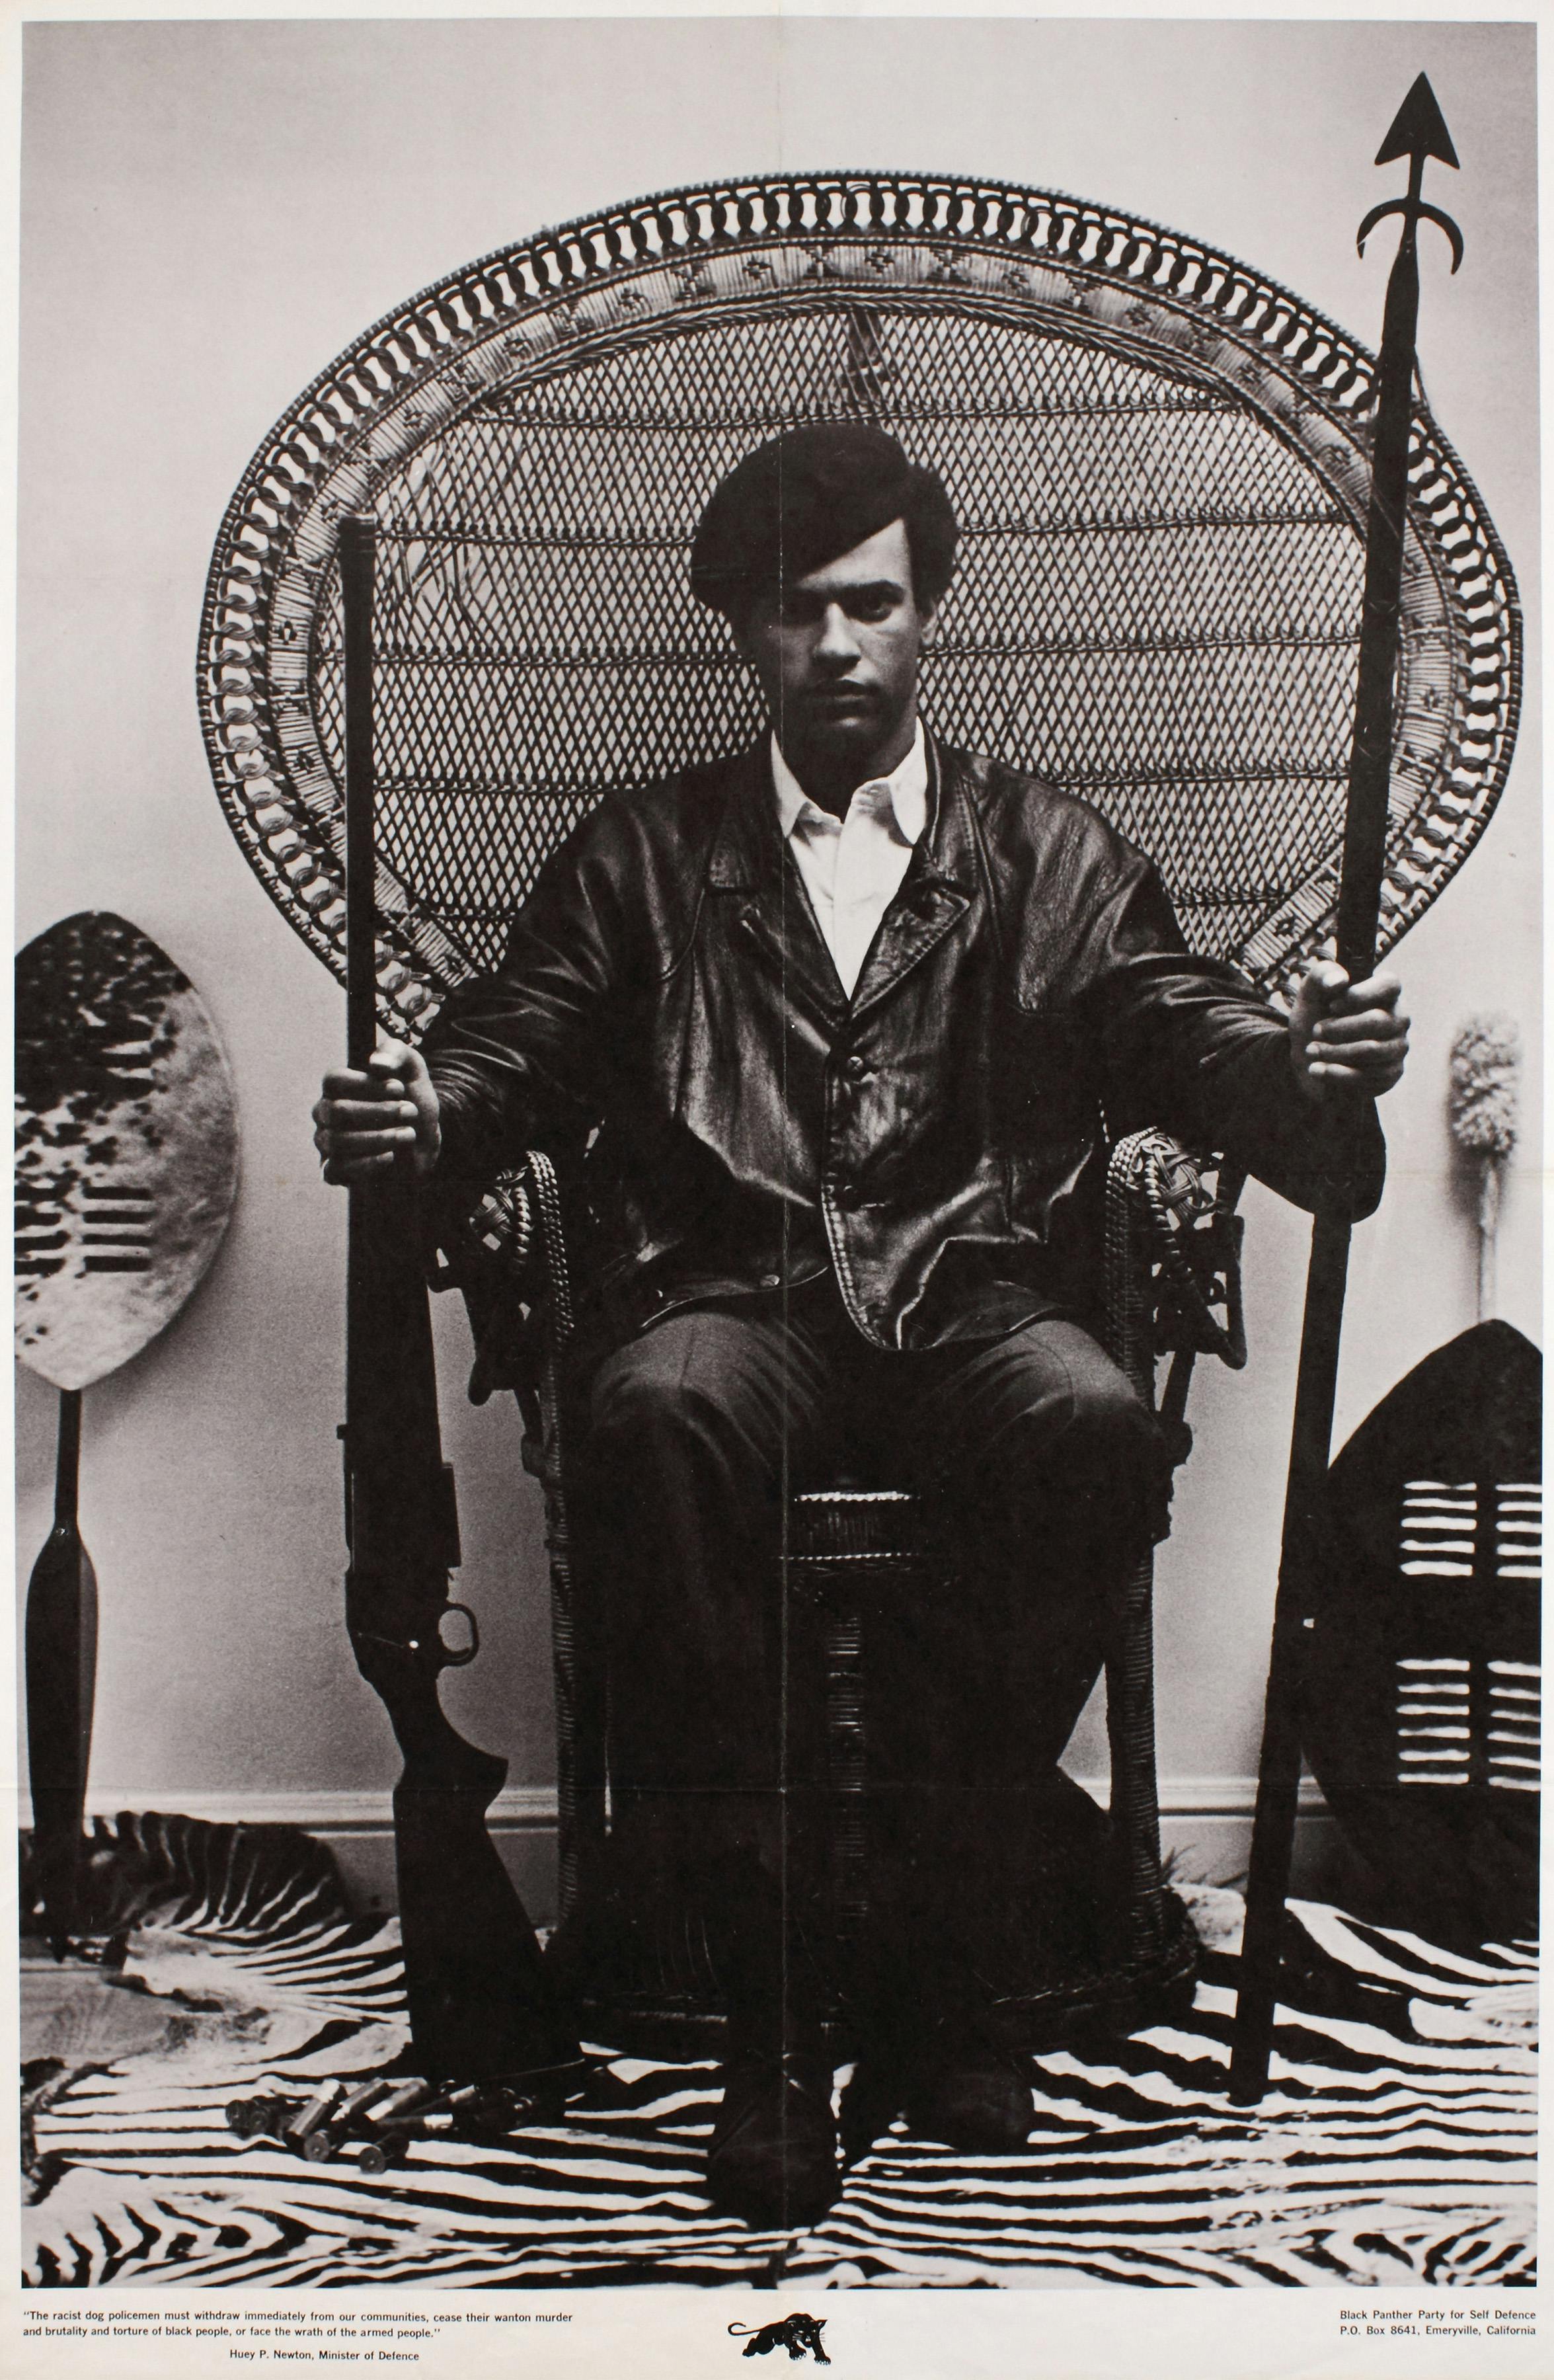 1960s black art and sculptures